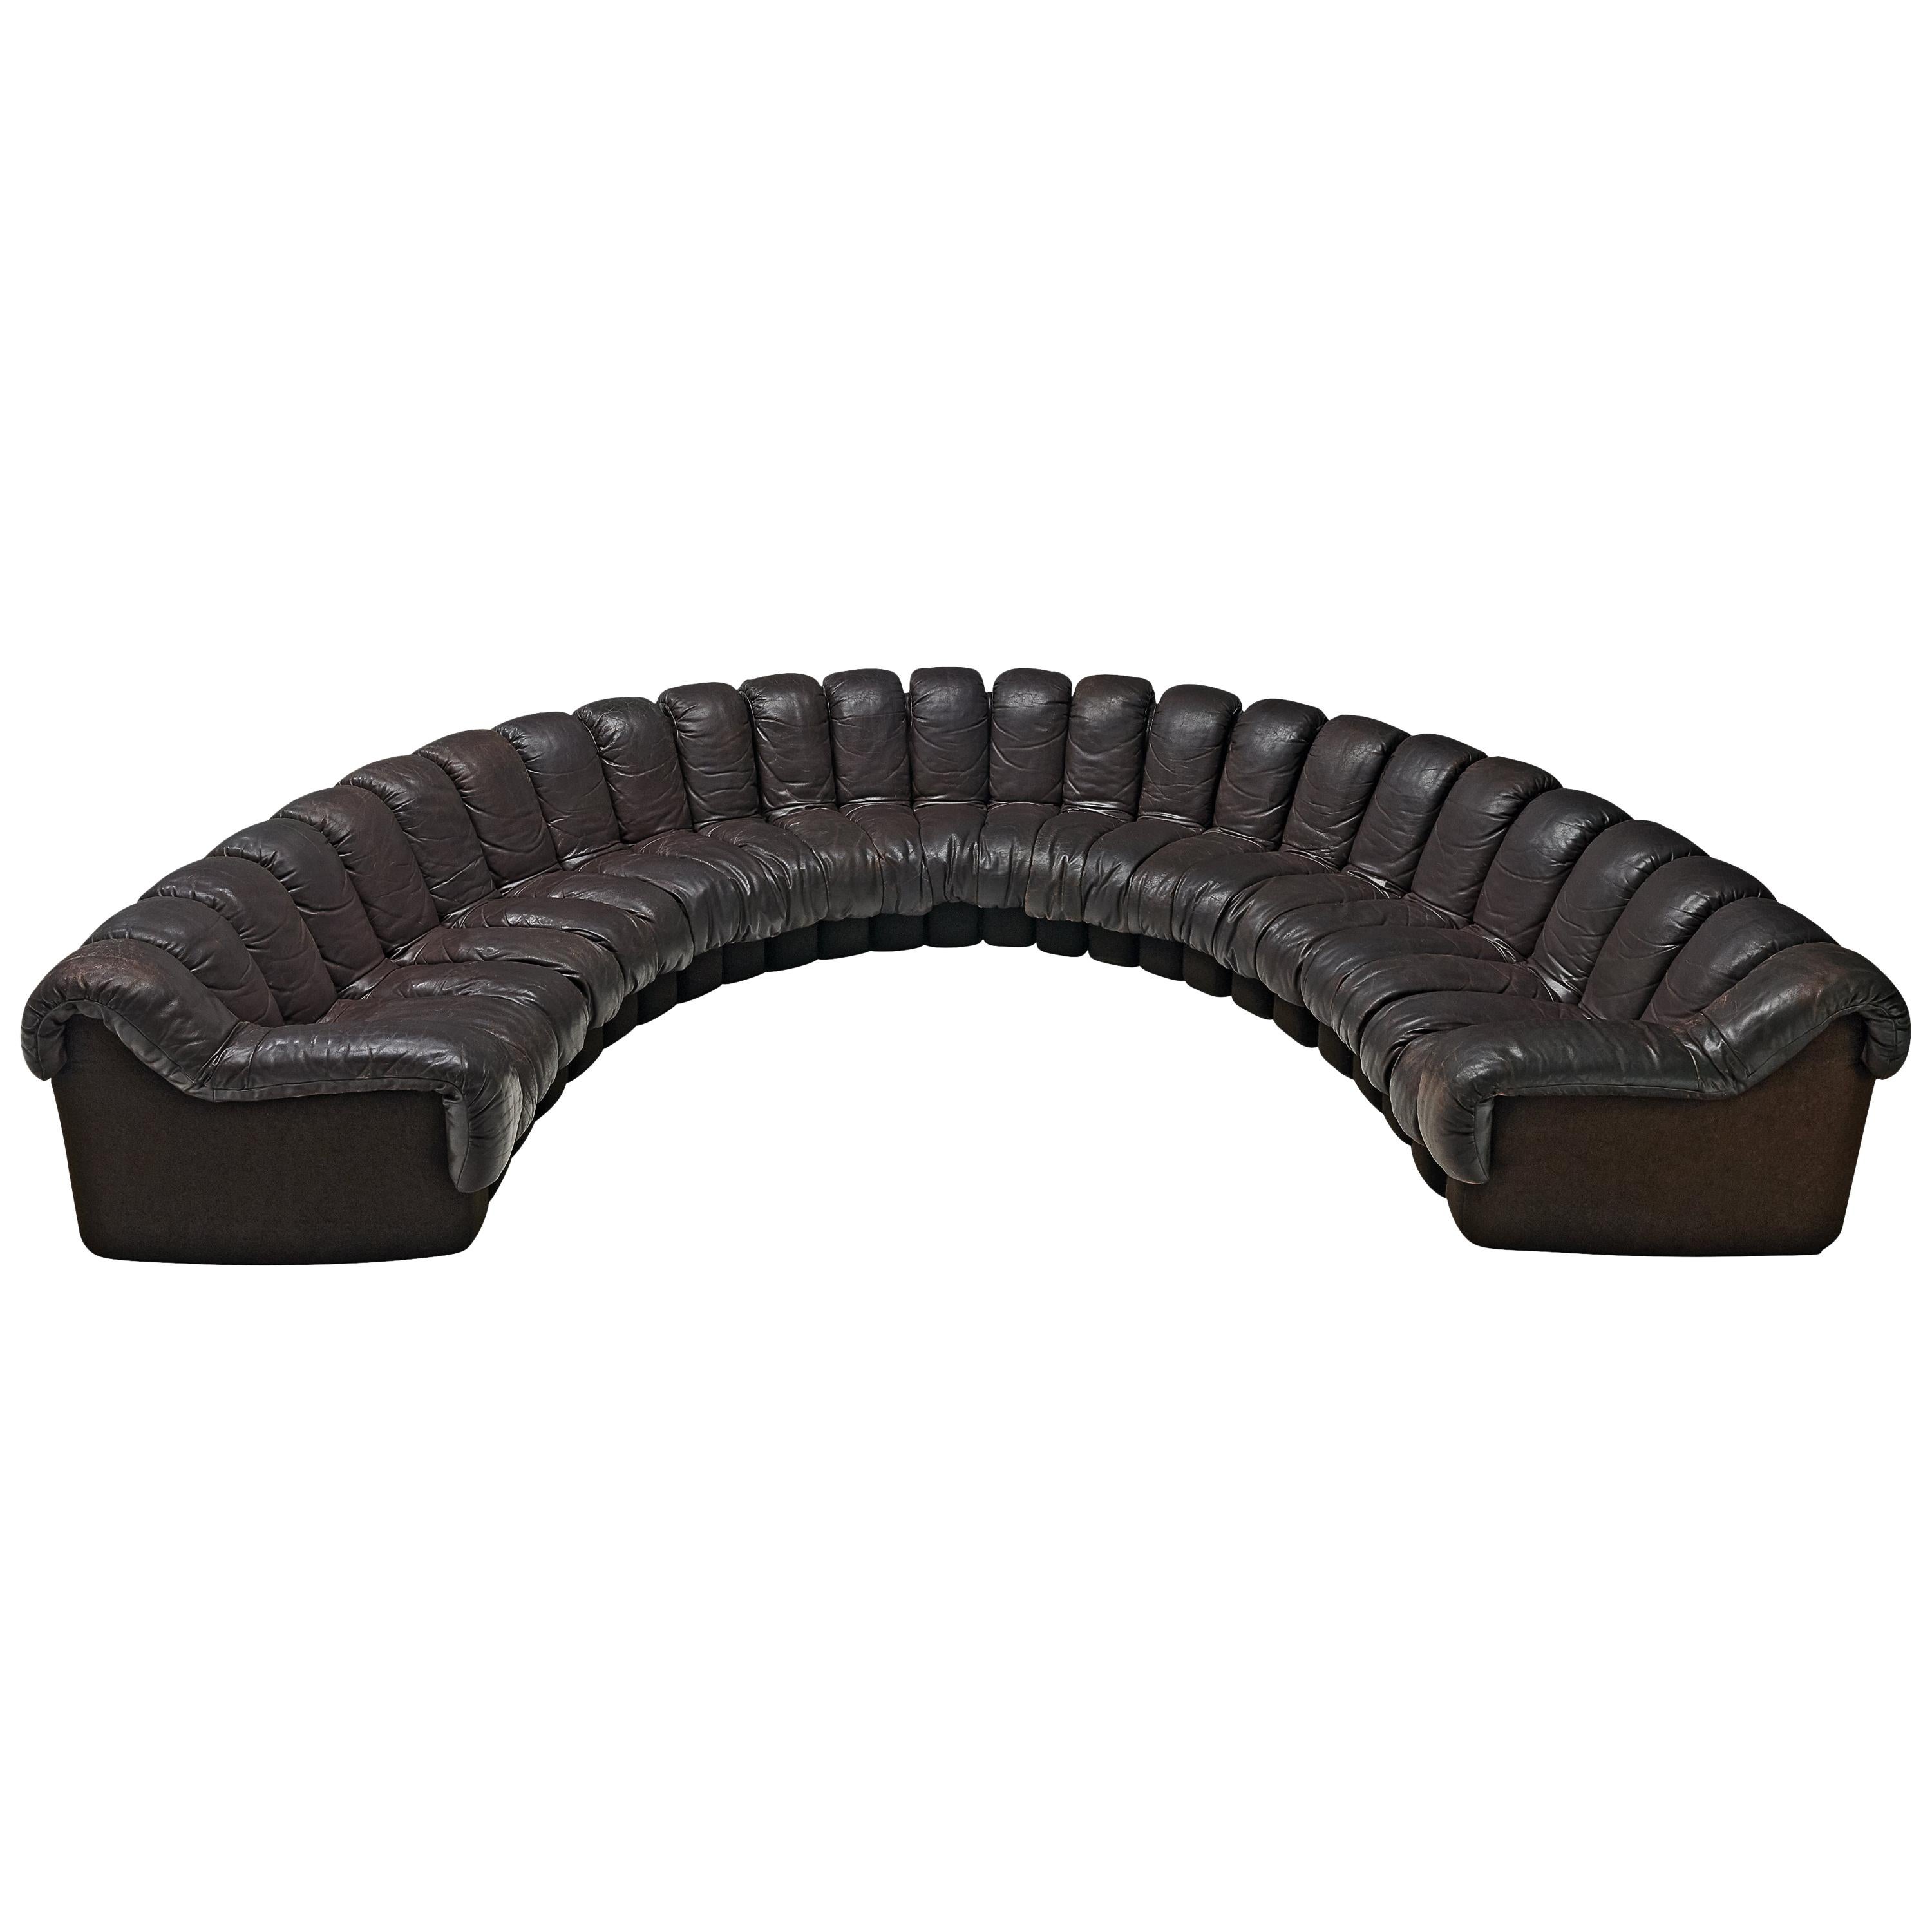 De Sede DS-600 ‘Snake’ Sofa in Dark Brown Leather